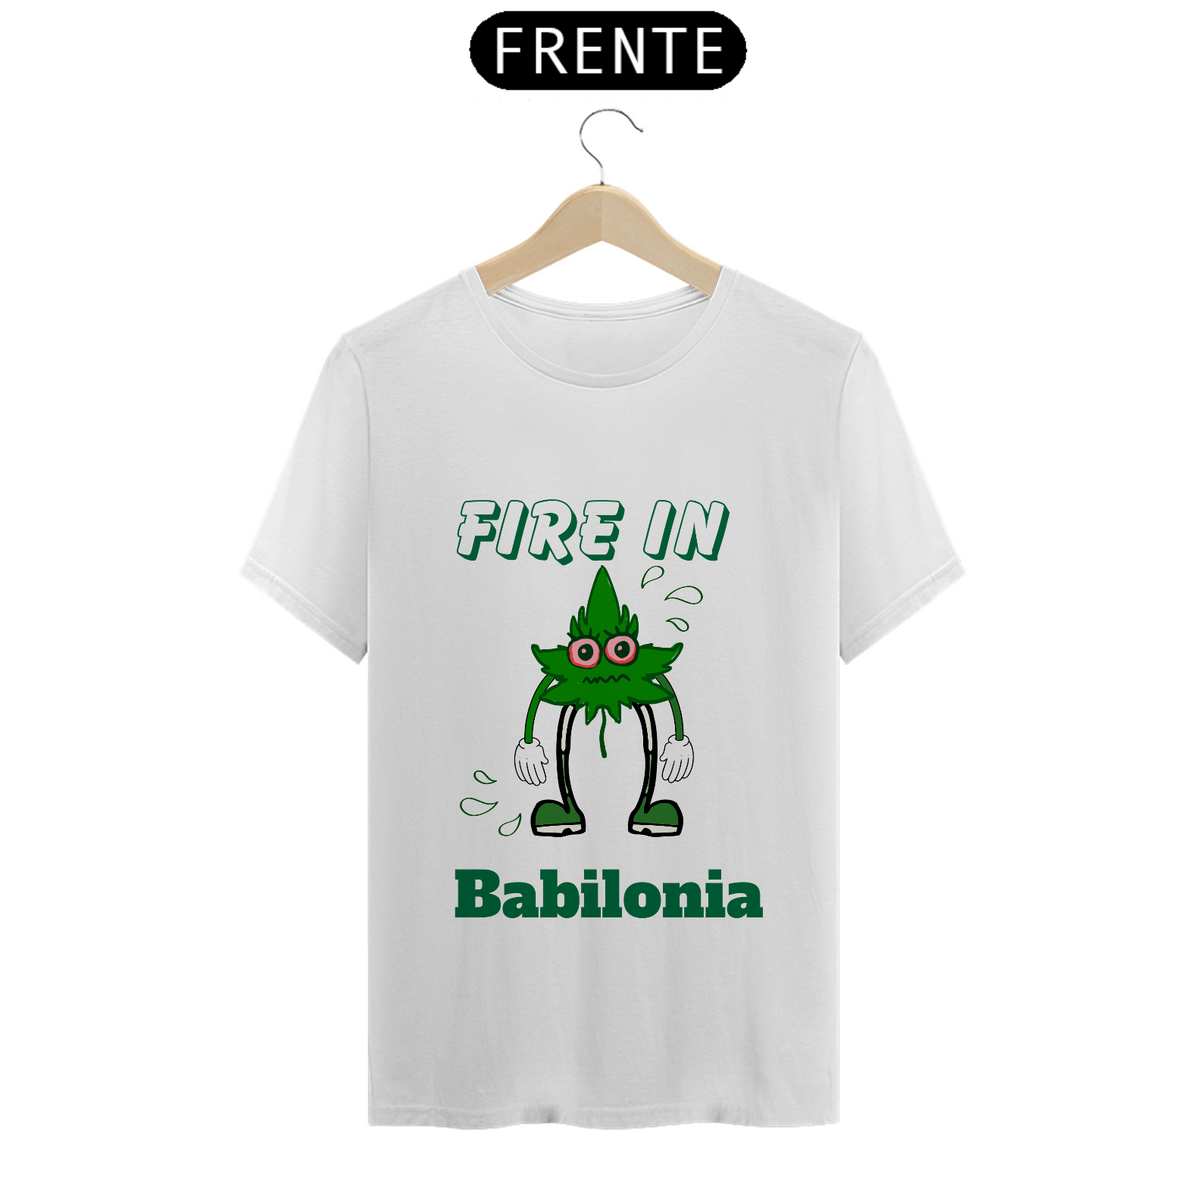 Nome do produto: Camiseta Babilonia